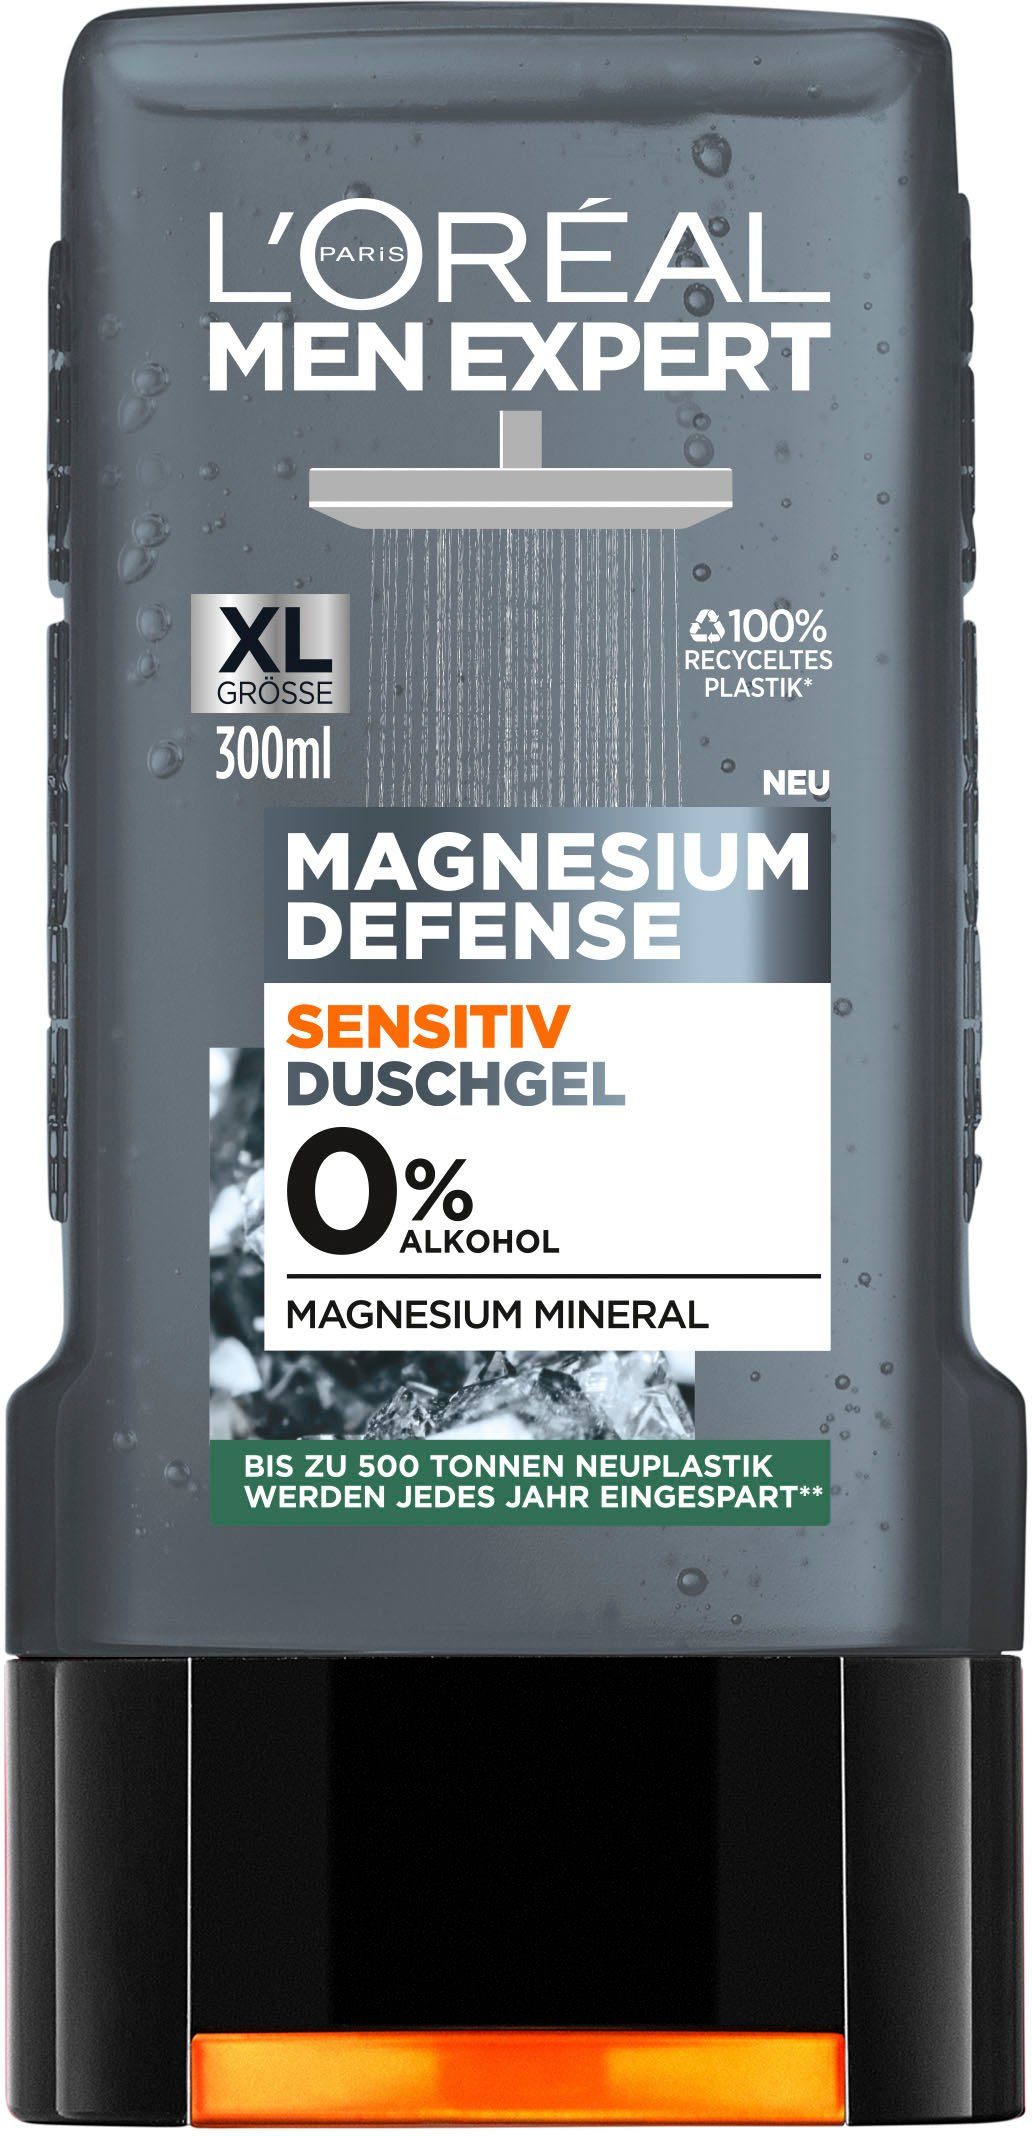 PARIS MEN Sensitiv Defense Duschgel Magnesium L'ORÉAL EXPERT